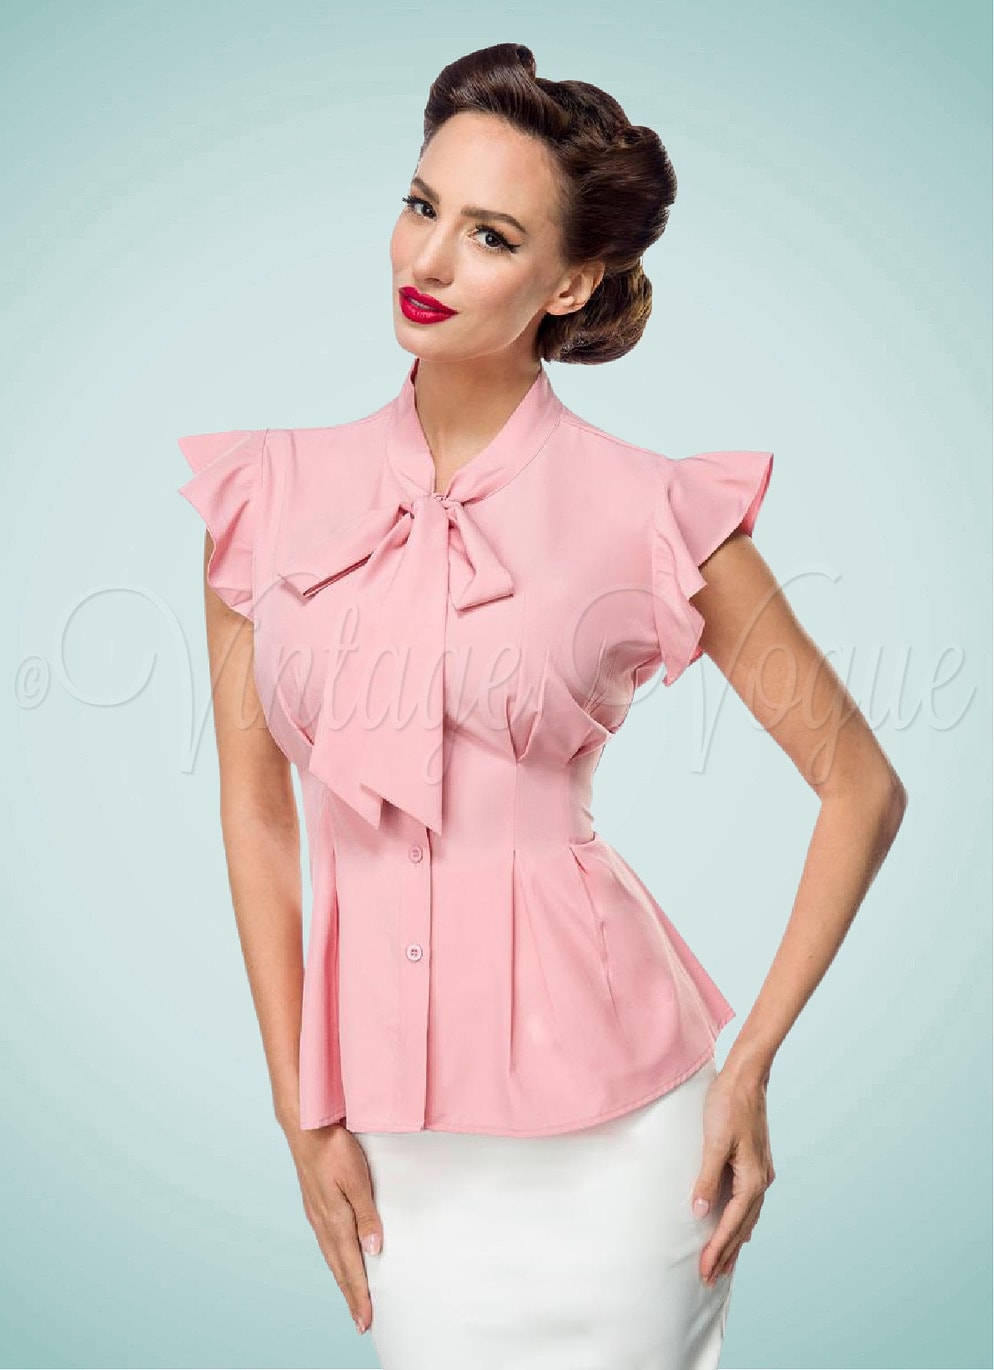 Belsira 40er Jahre Retro Vintage Schluppen Bluse in Rosa